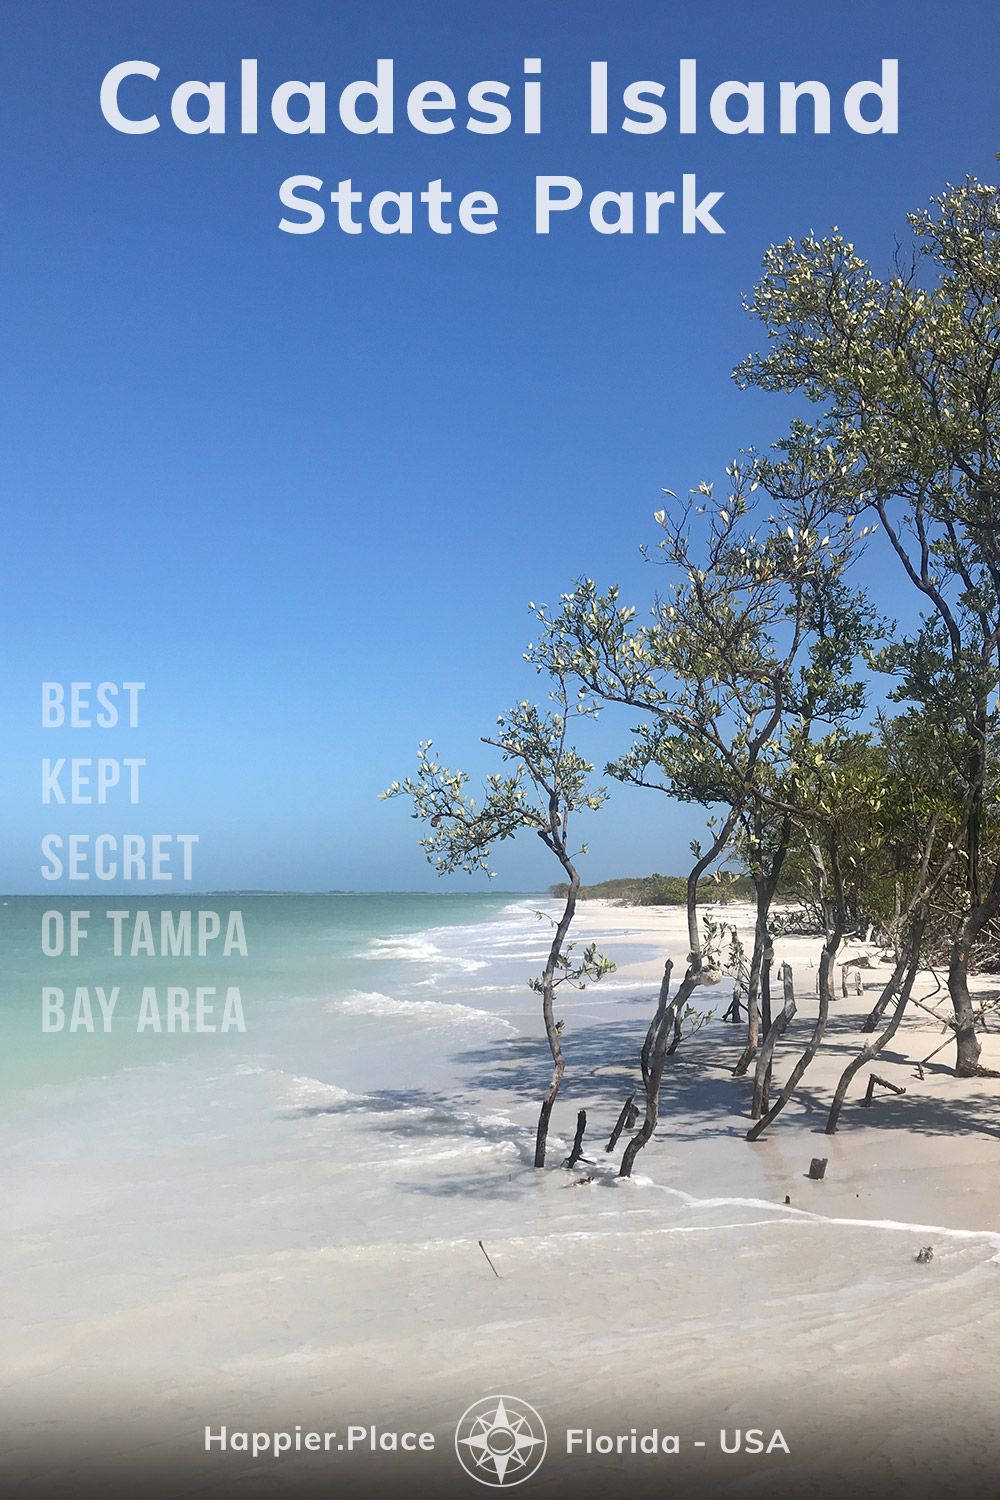 Caladesi Island State Park, Tampa Bay Area's Best-Kept Secret, Unspoiled Gulf Coast Island